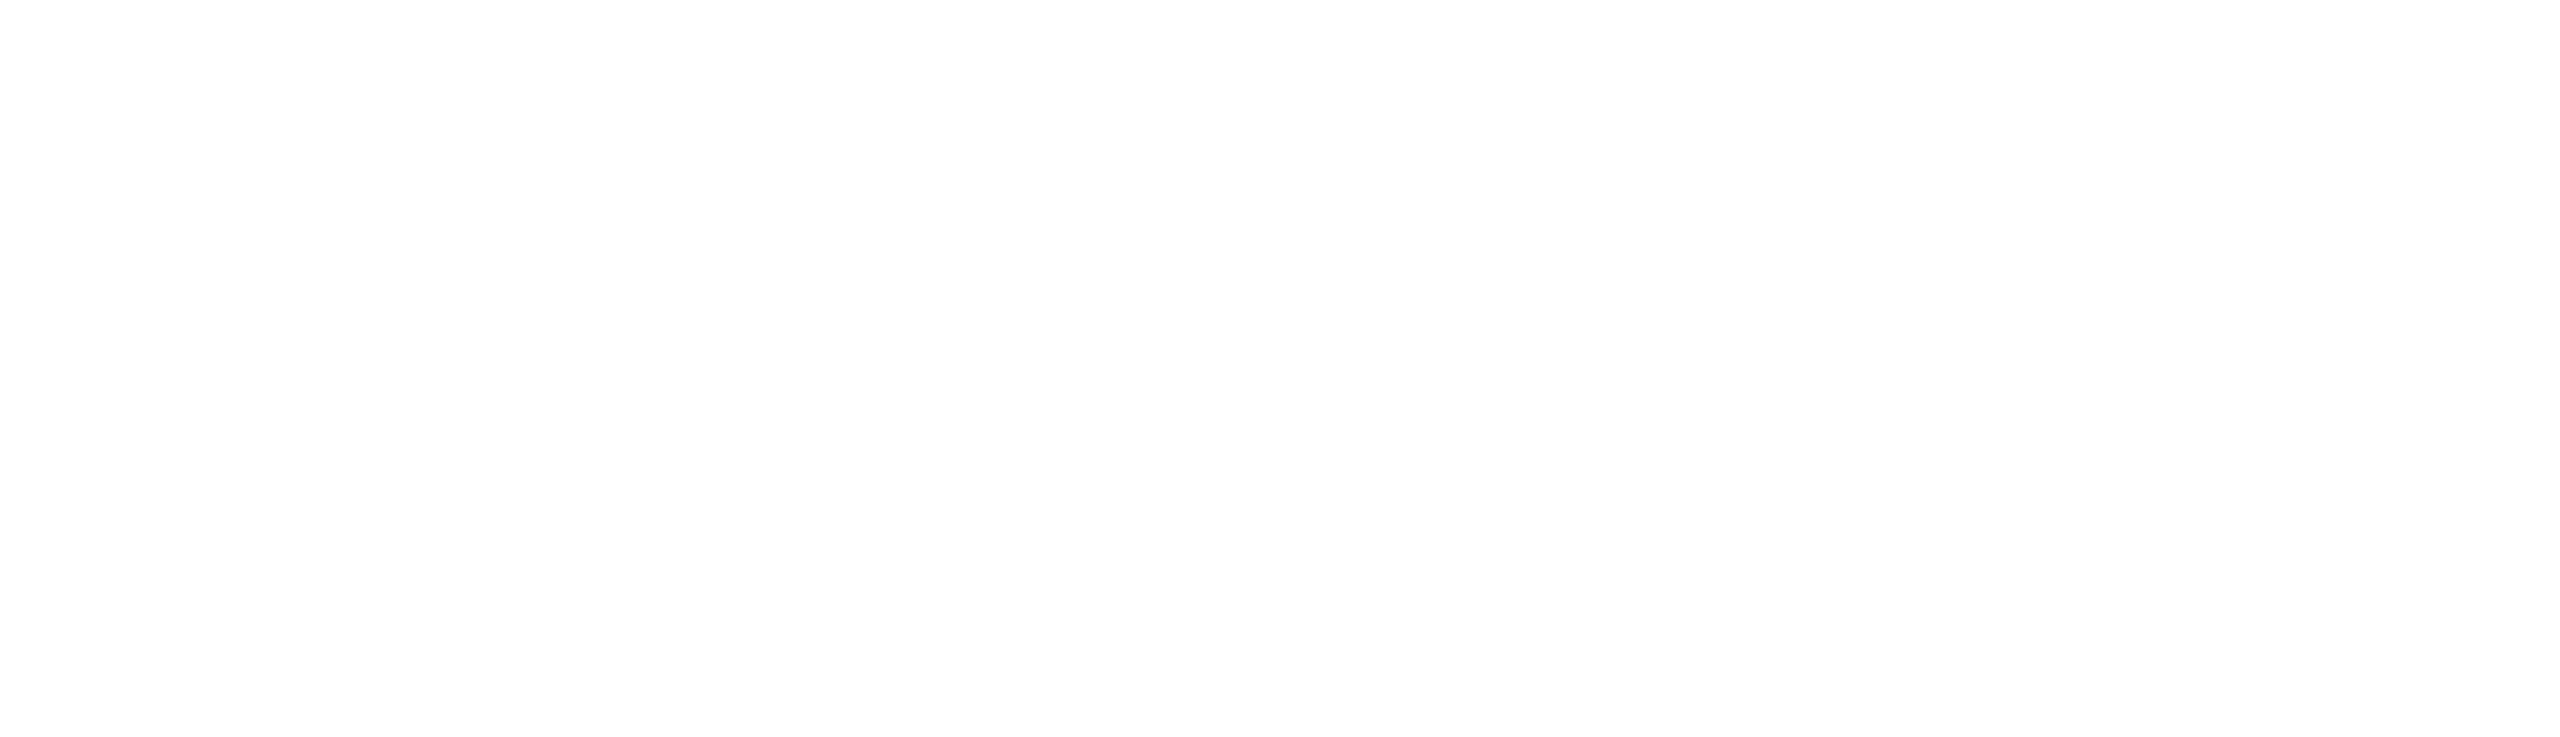 2560px-CBS_logo_(2020).svg